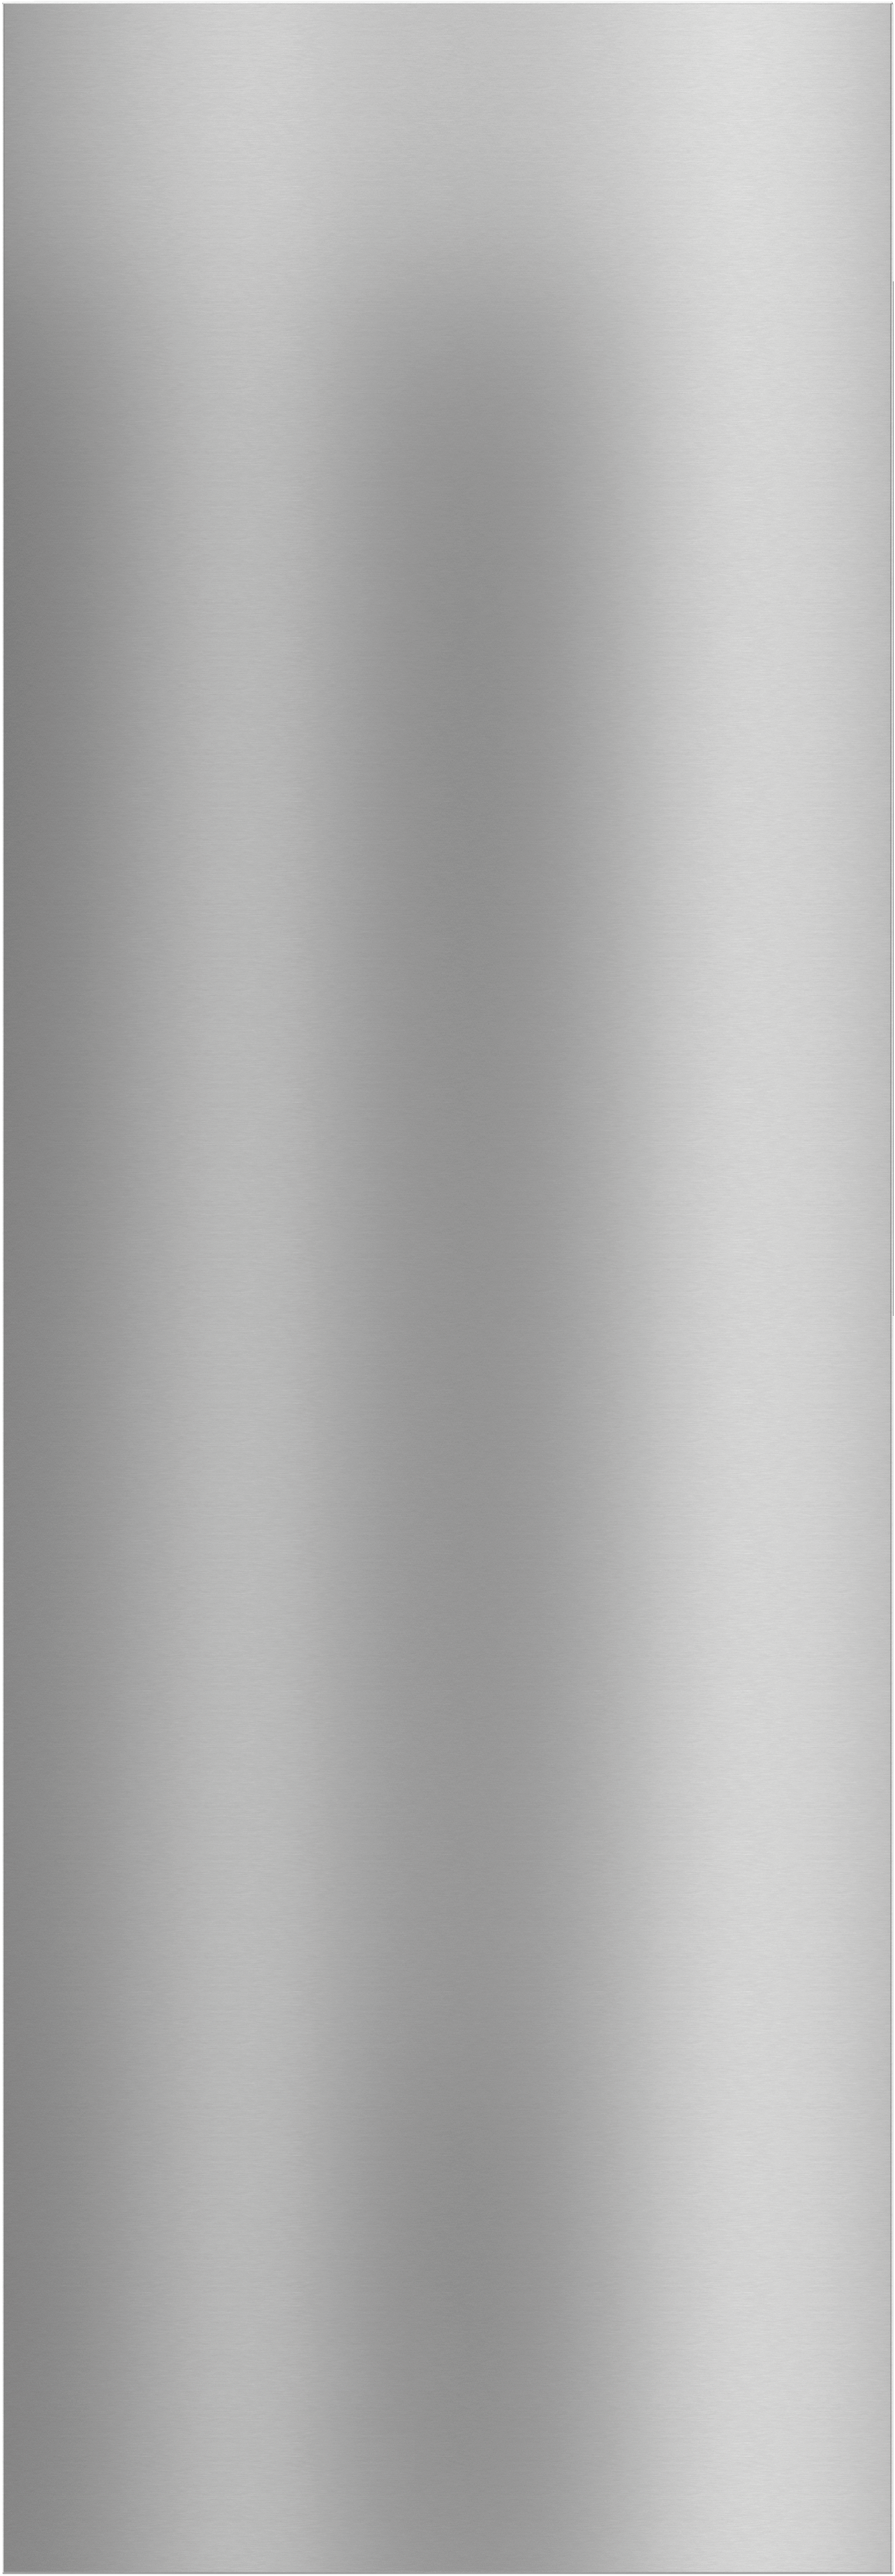 Refrigeration - KFP 3635 ed/cs - 1